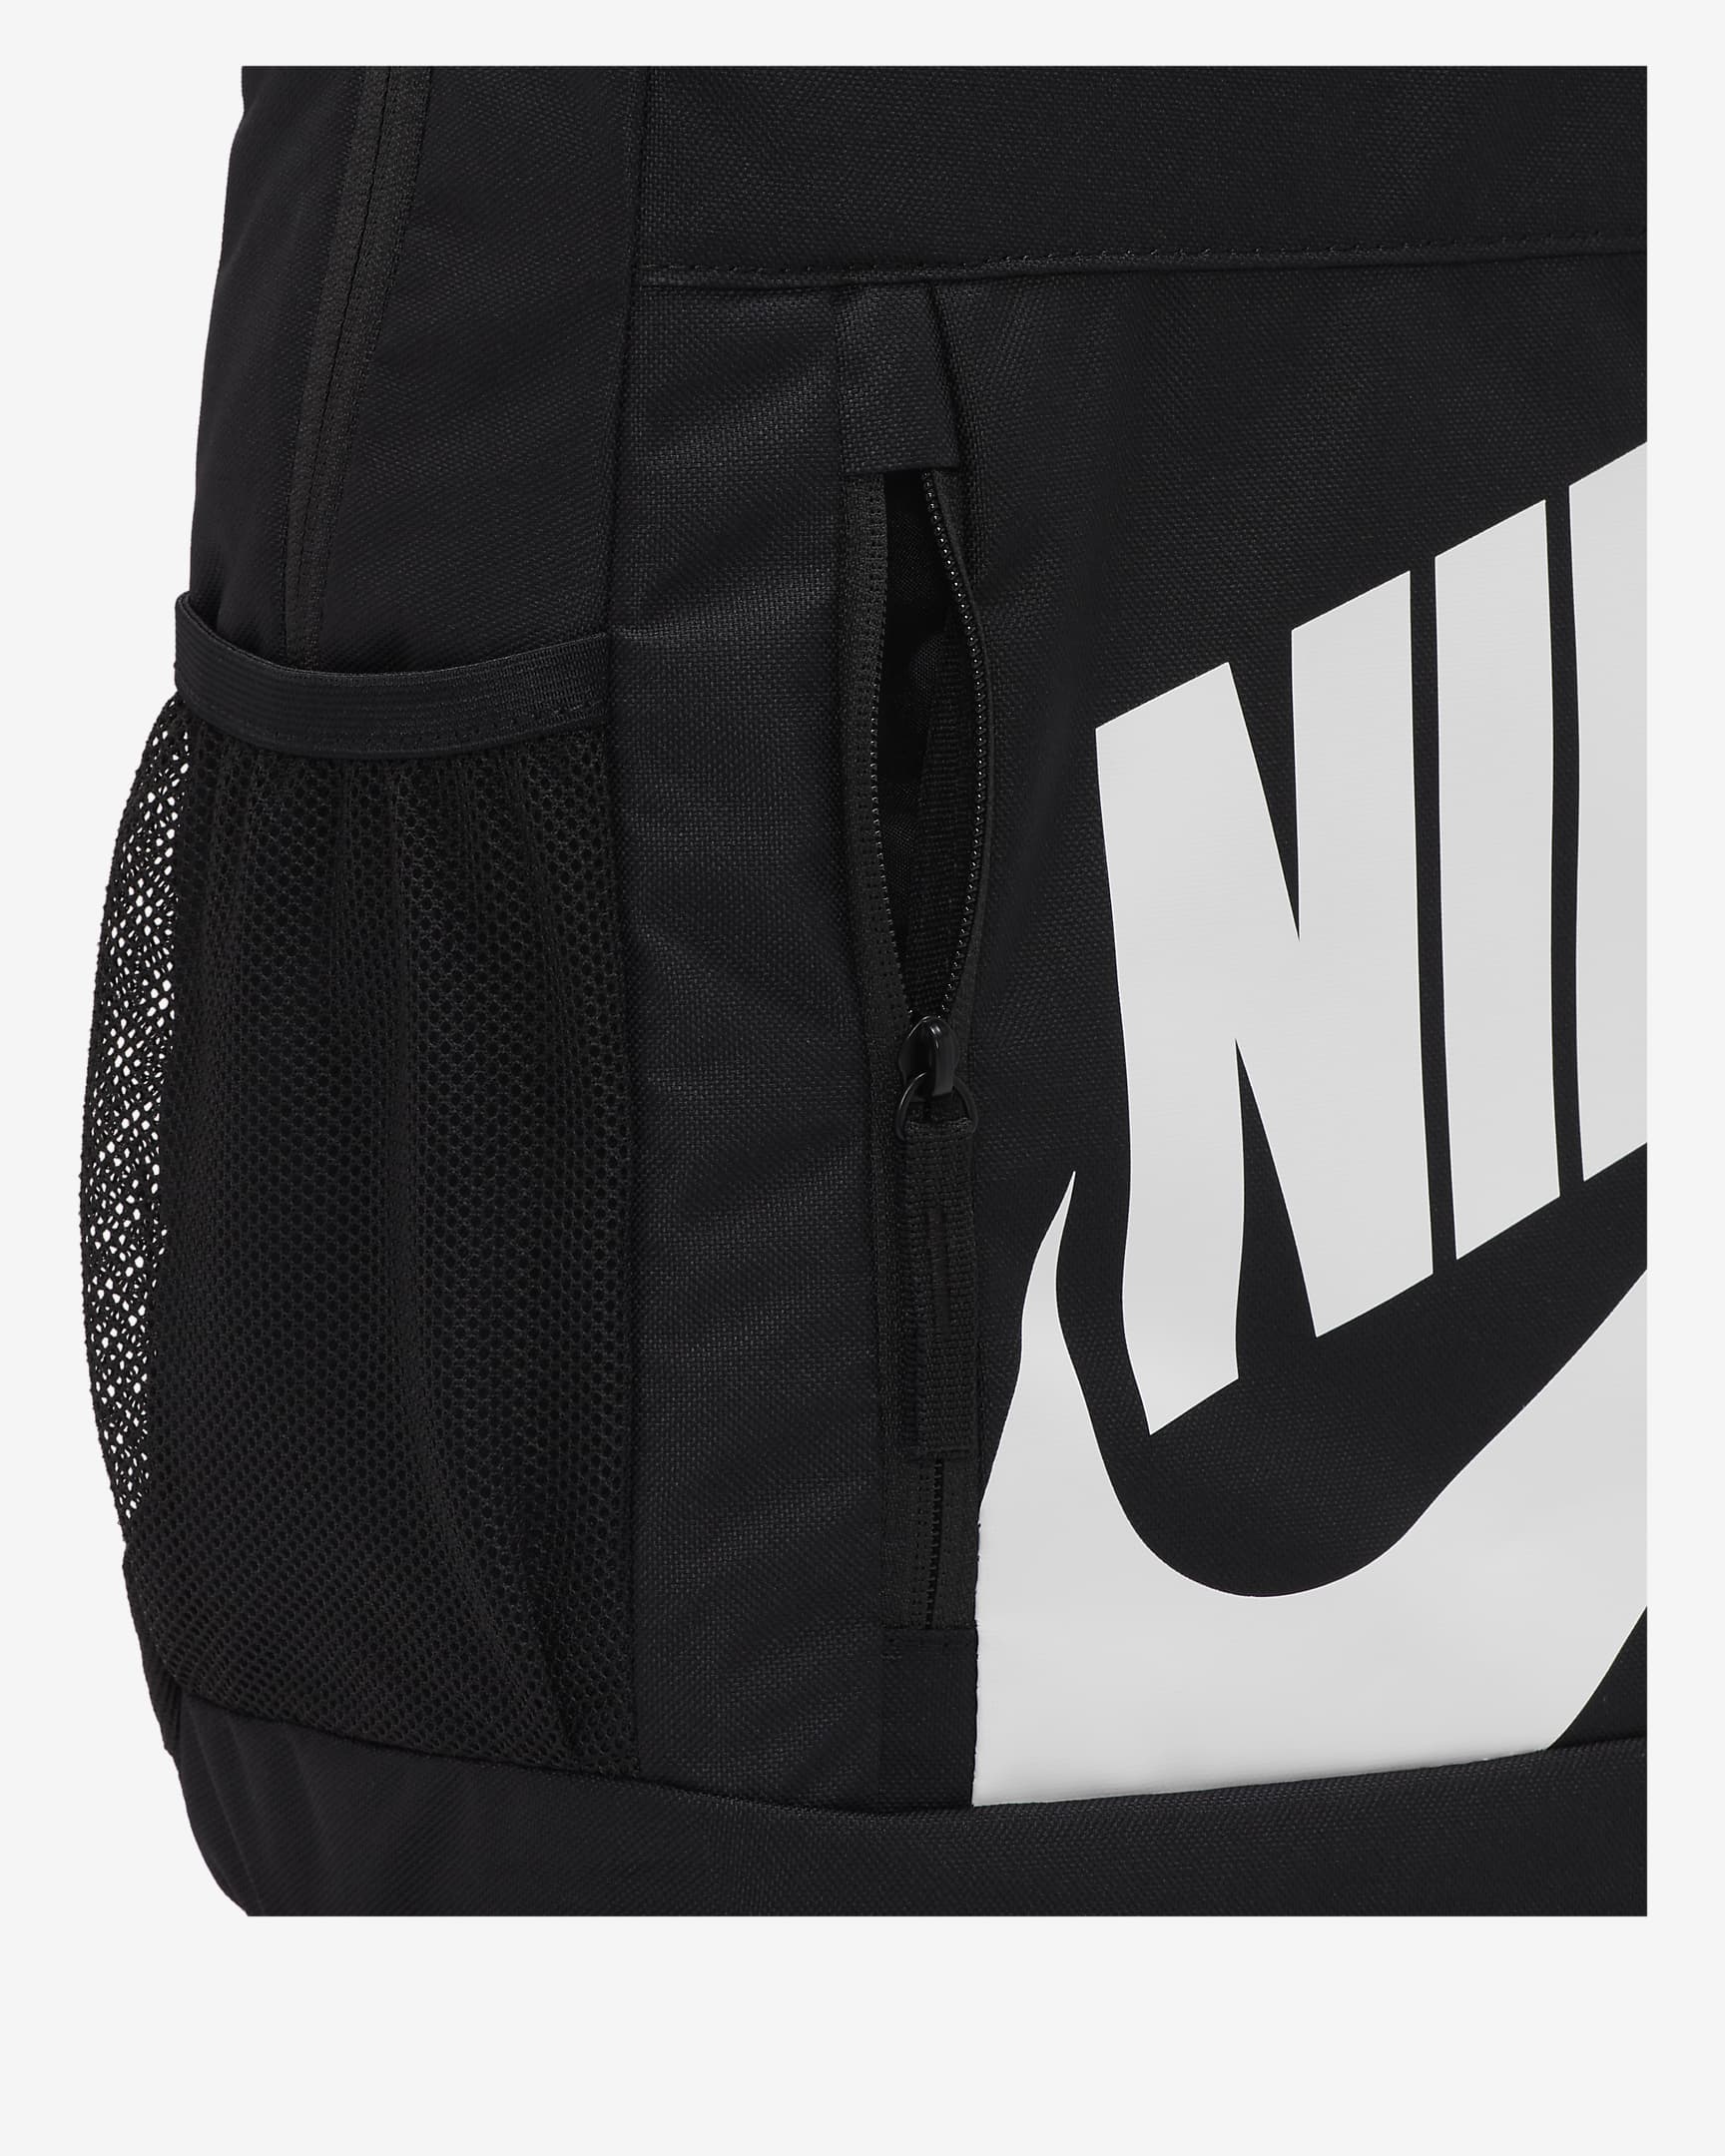 Nike Elemental Kids' Backpack (20L) - Black/Black/White